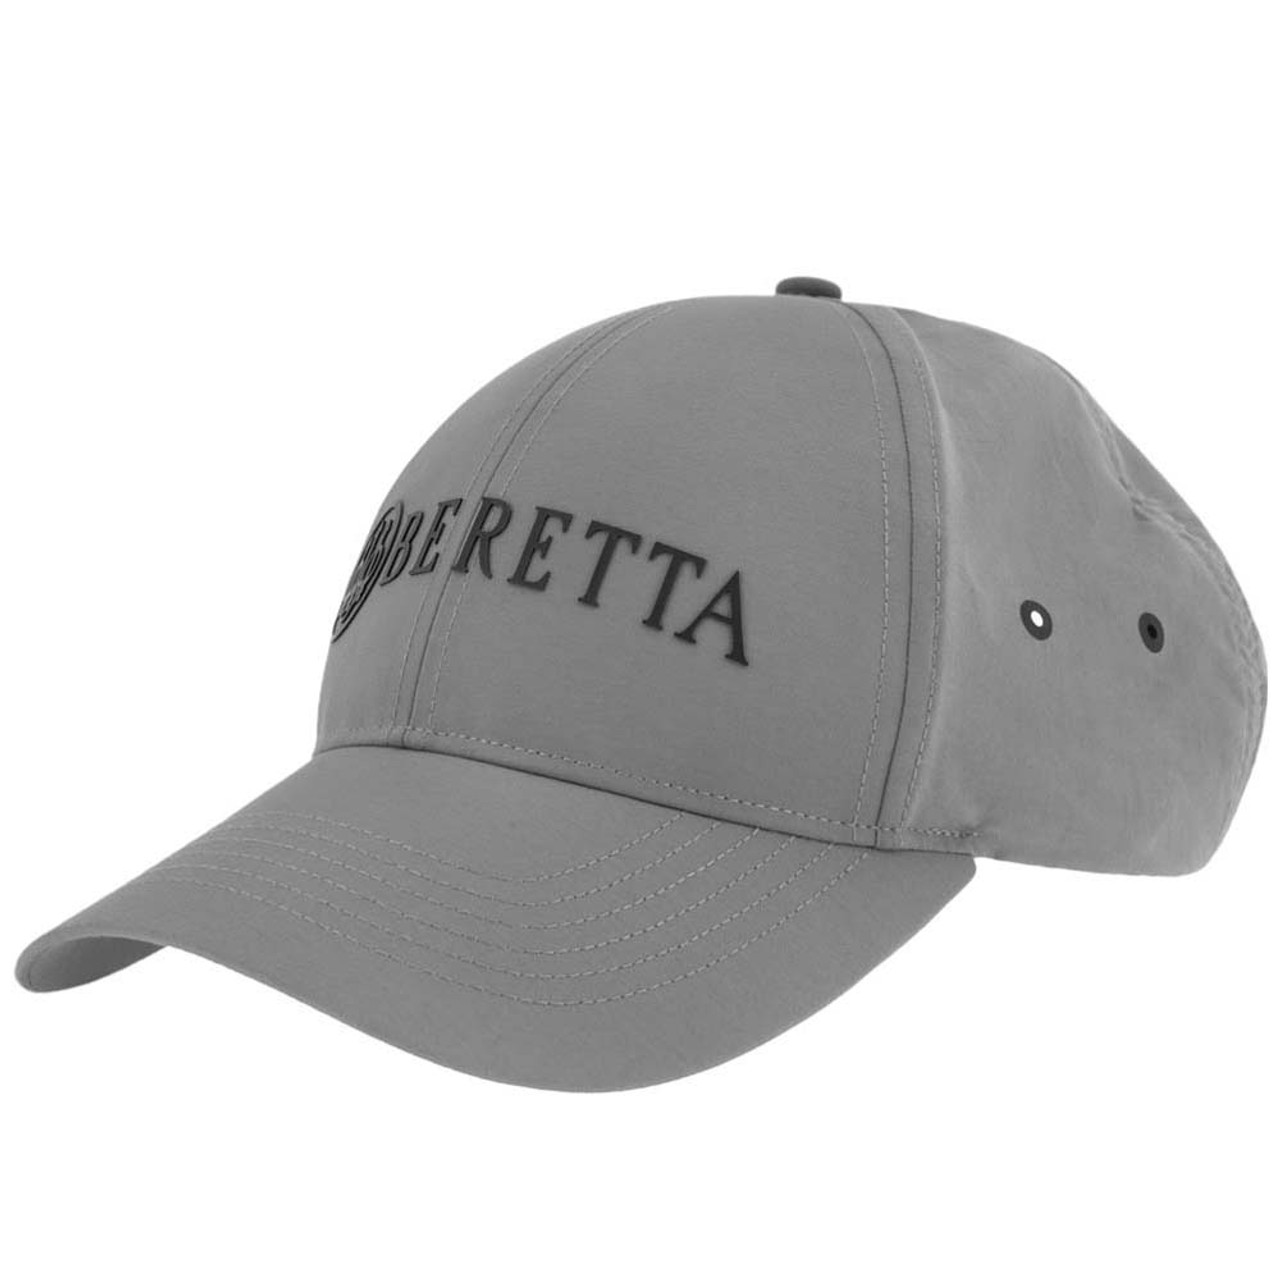 Beretta Peak Performance Cap-Gray- Front